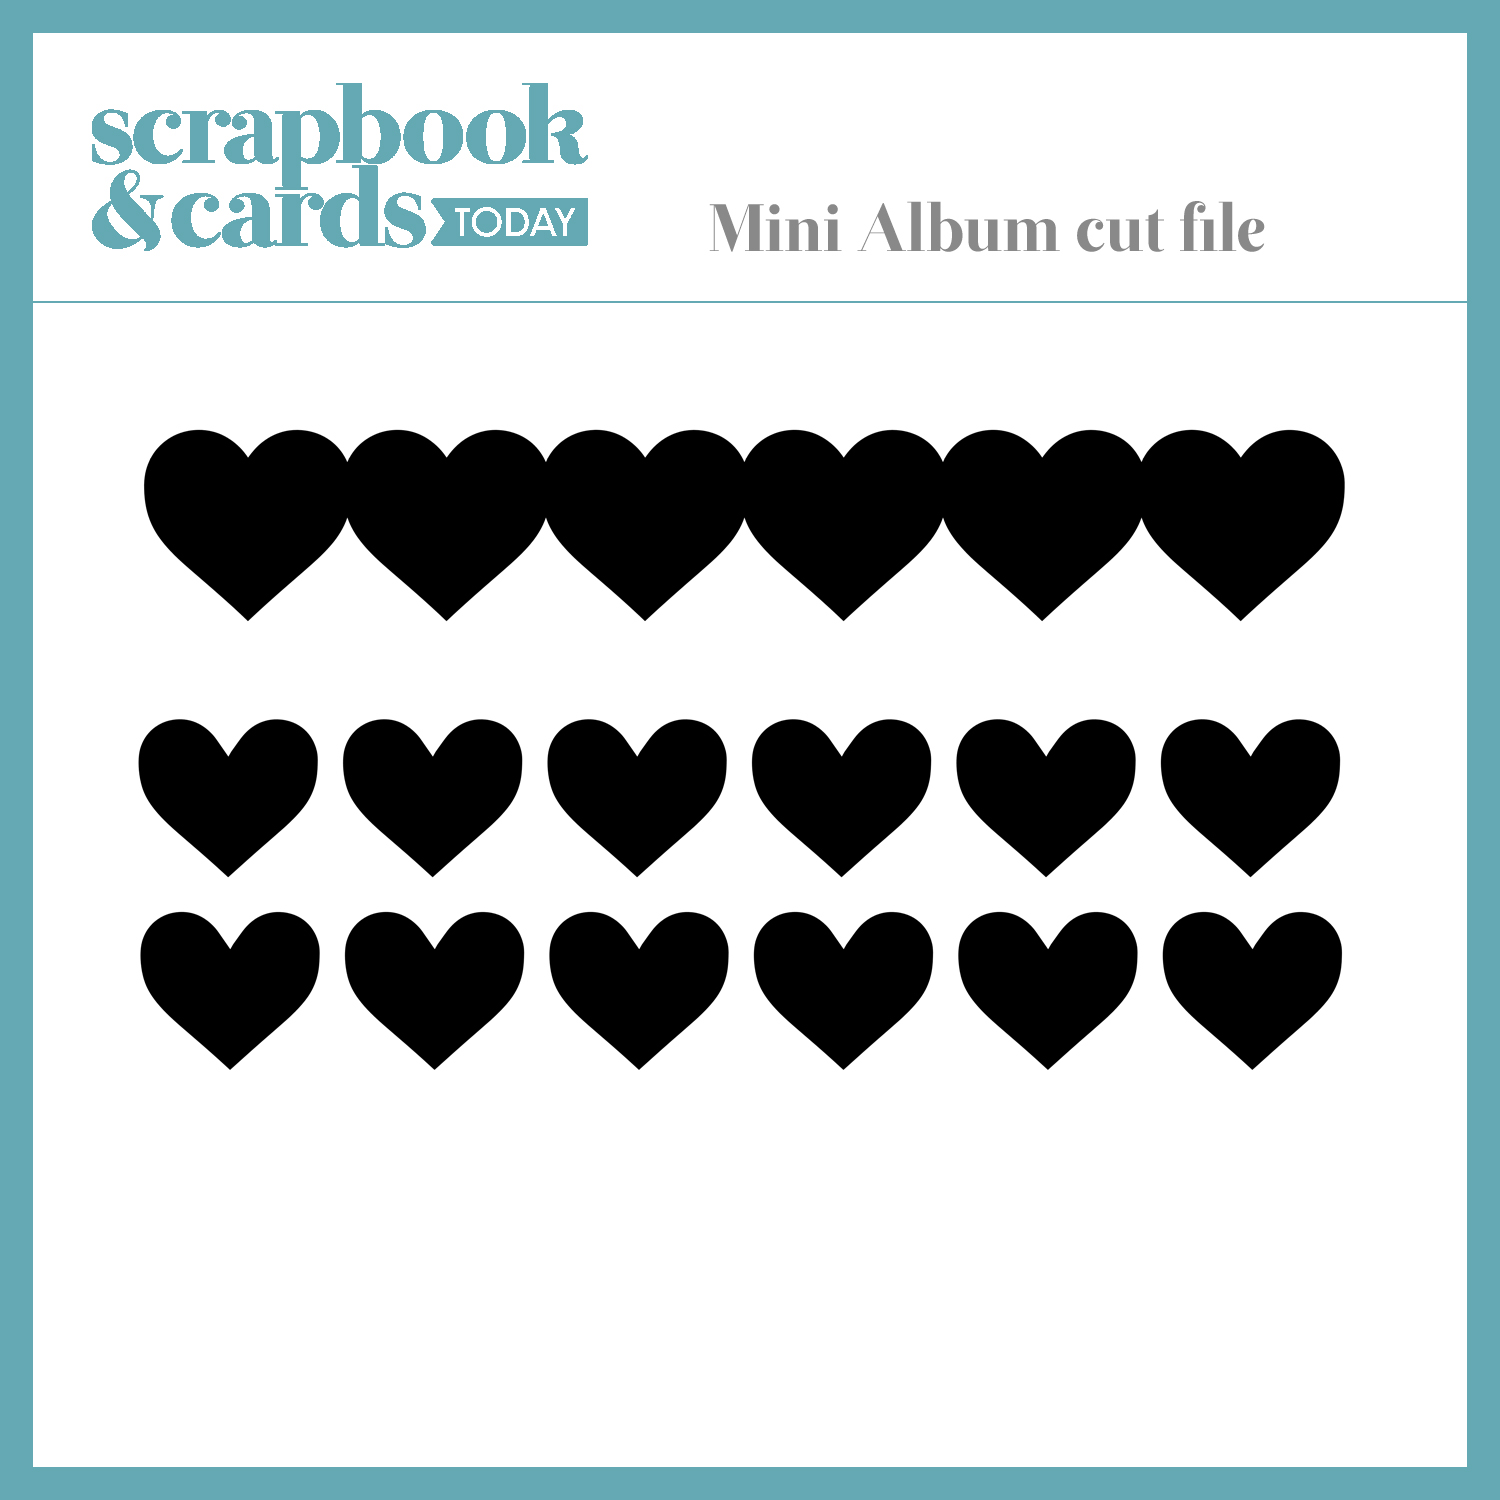 Mini album - Free cut file February 2019 by Scrapbook & Cards Today